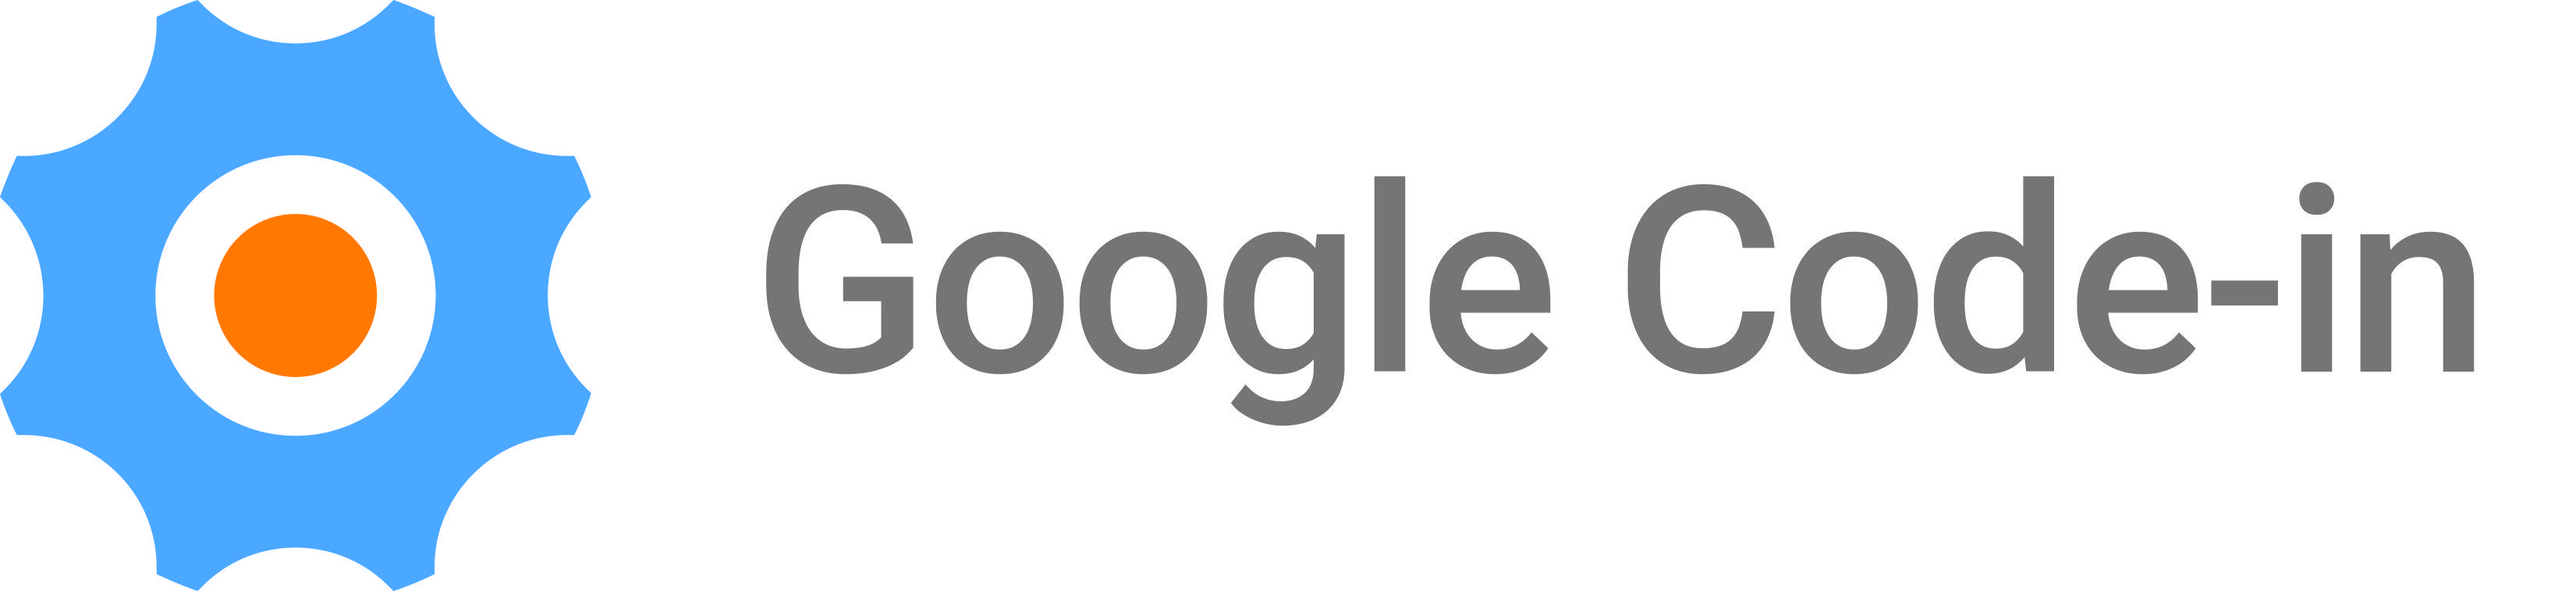 GCI Logo - Google Code-in | Google Developers